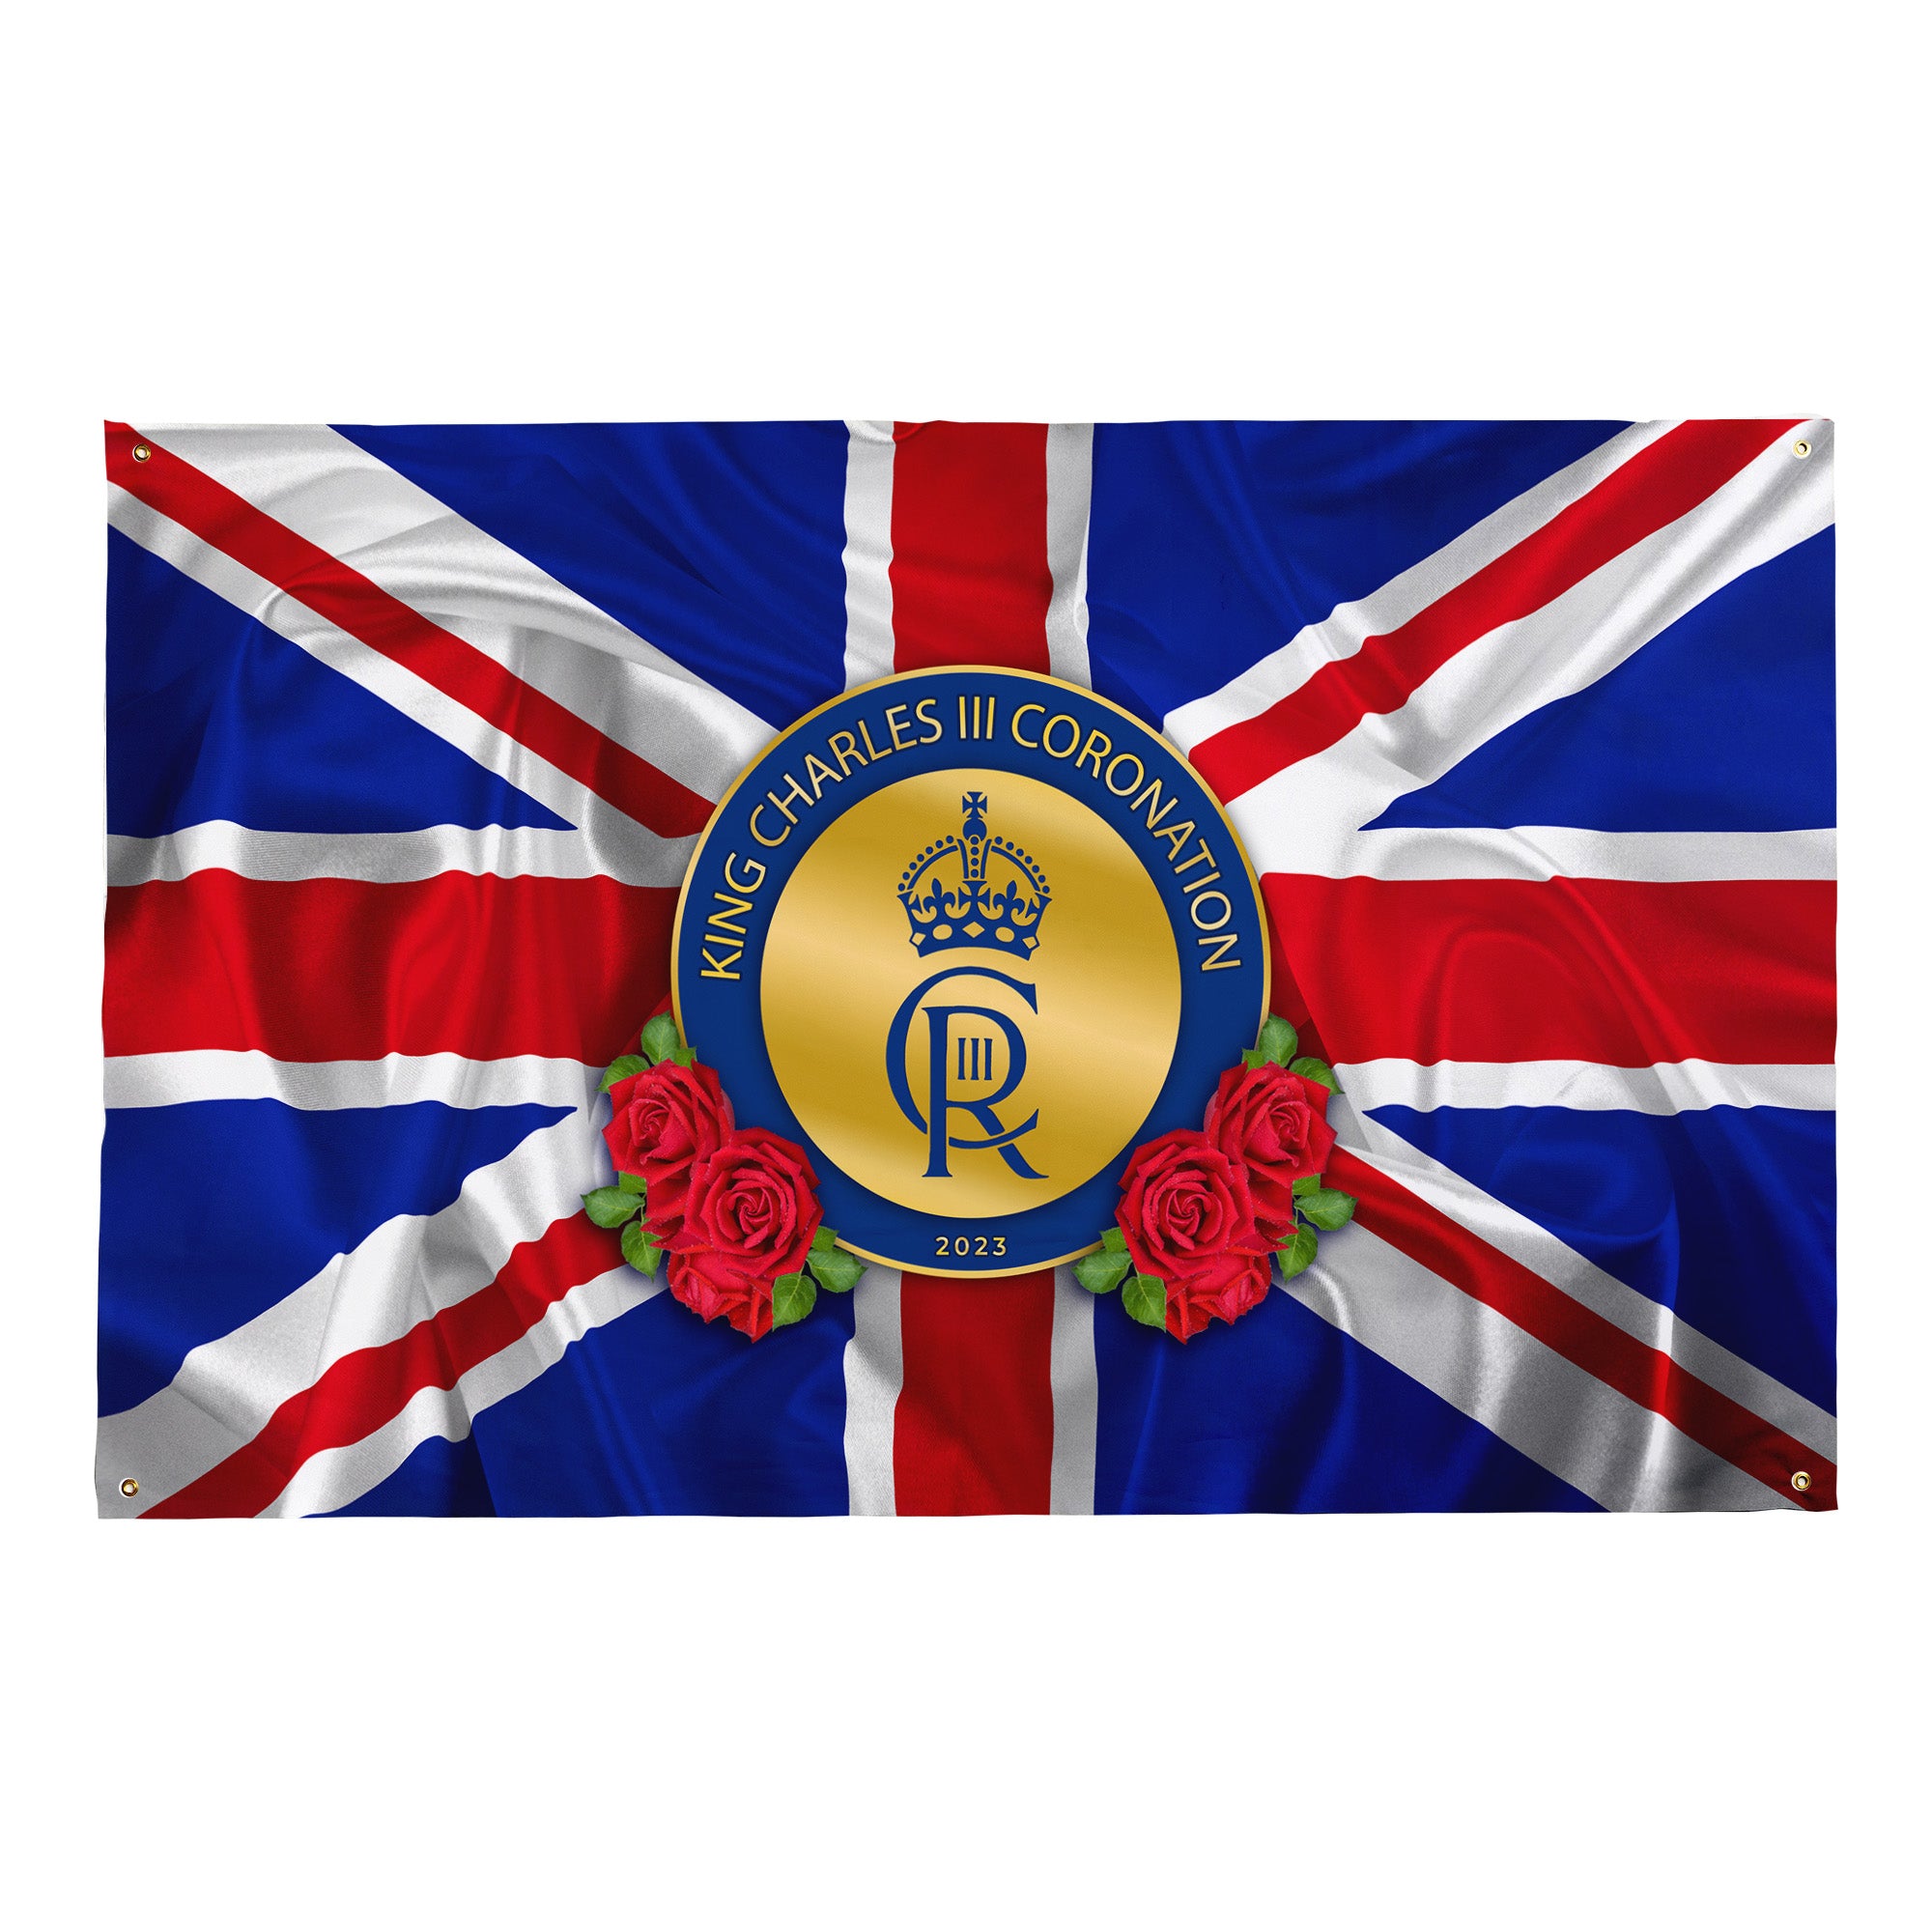 King Charles Coronation - Roses - Union Jack - 5ft x 3ft Fabric Banner